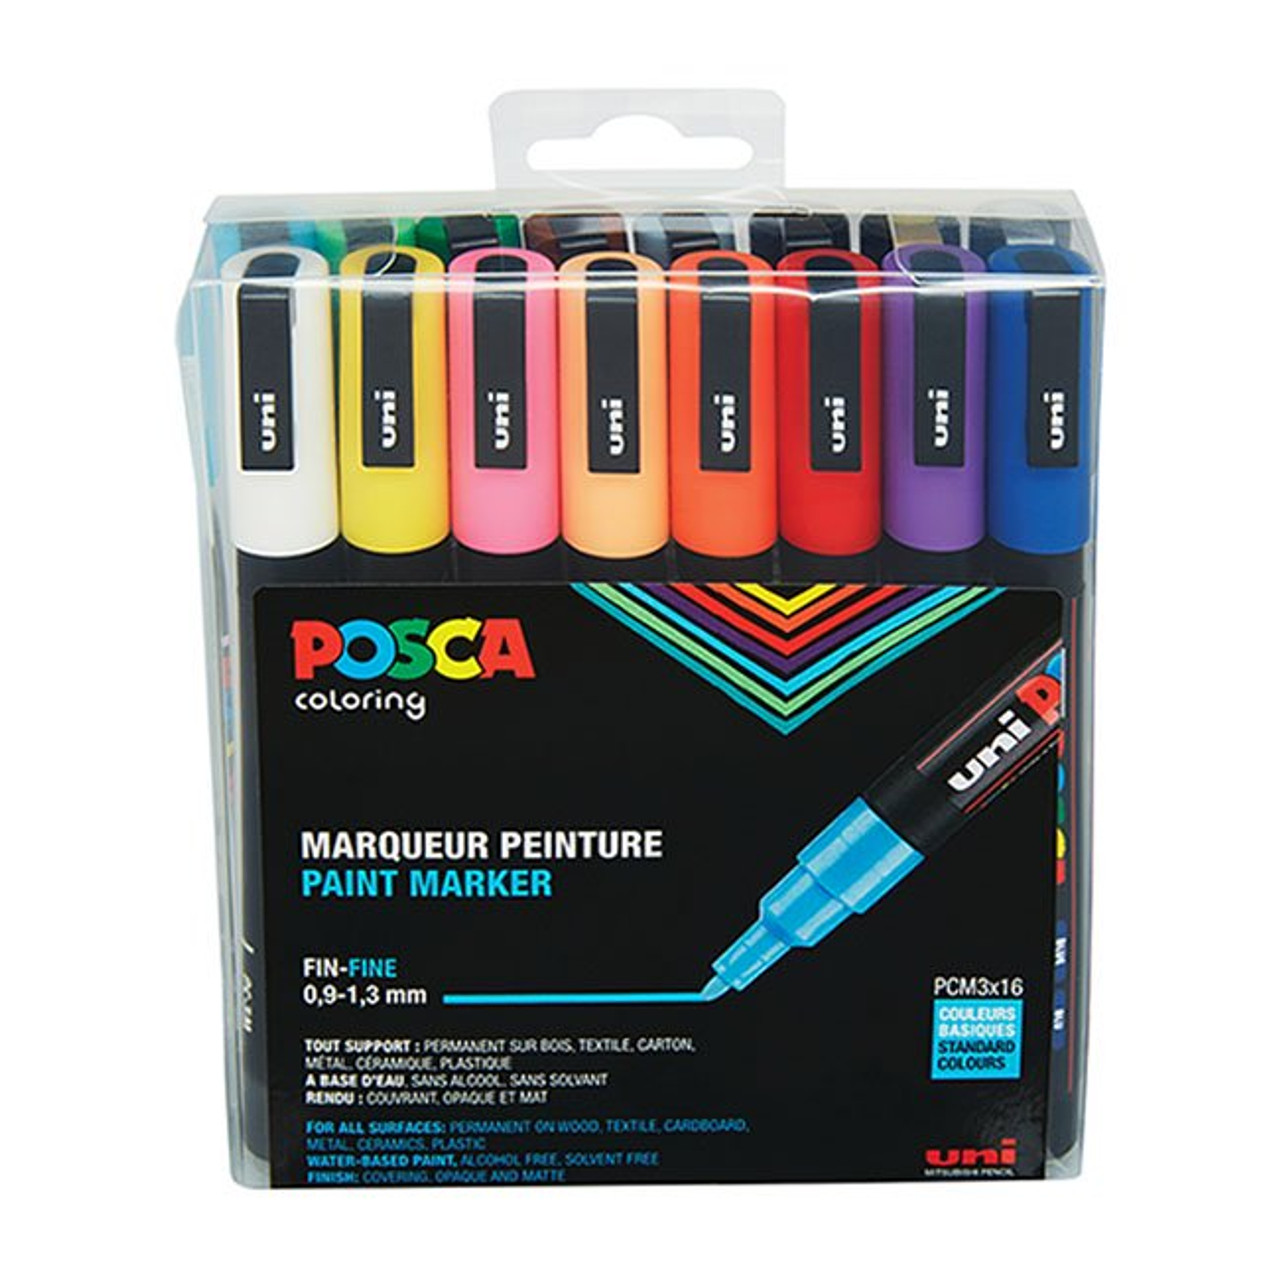 Posca Fine Tip Paint Marker Set, 16 Colors - Artist & Craftsman Supply